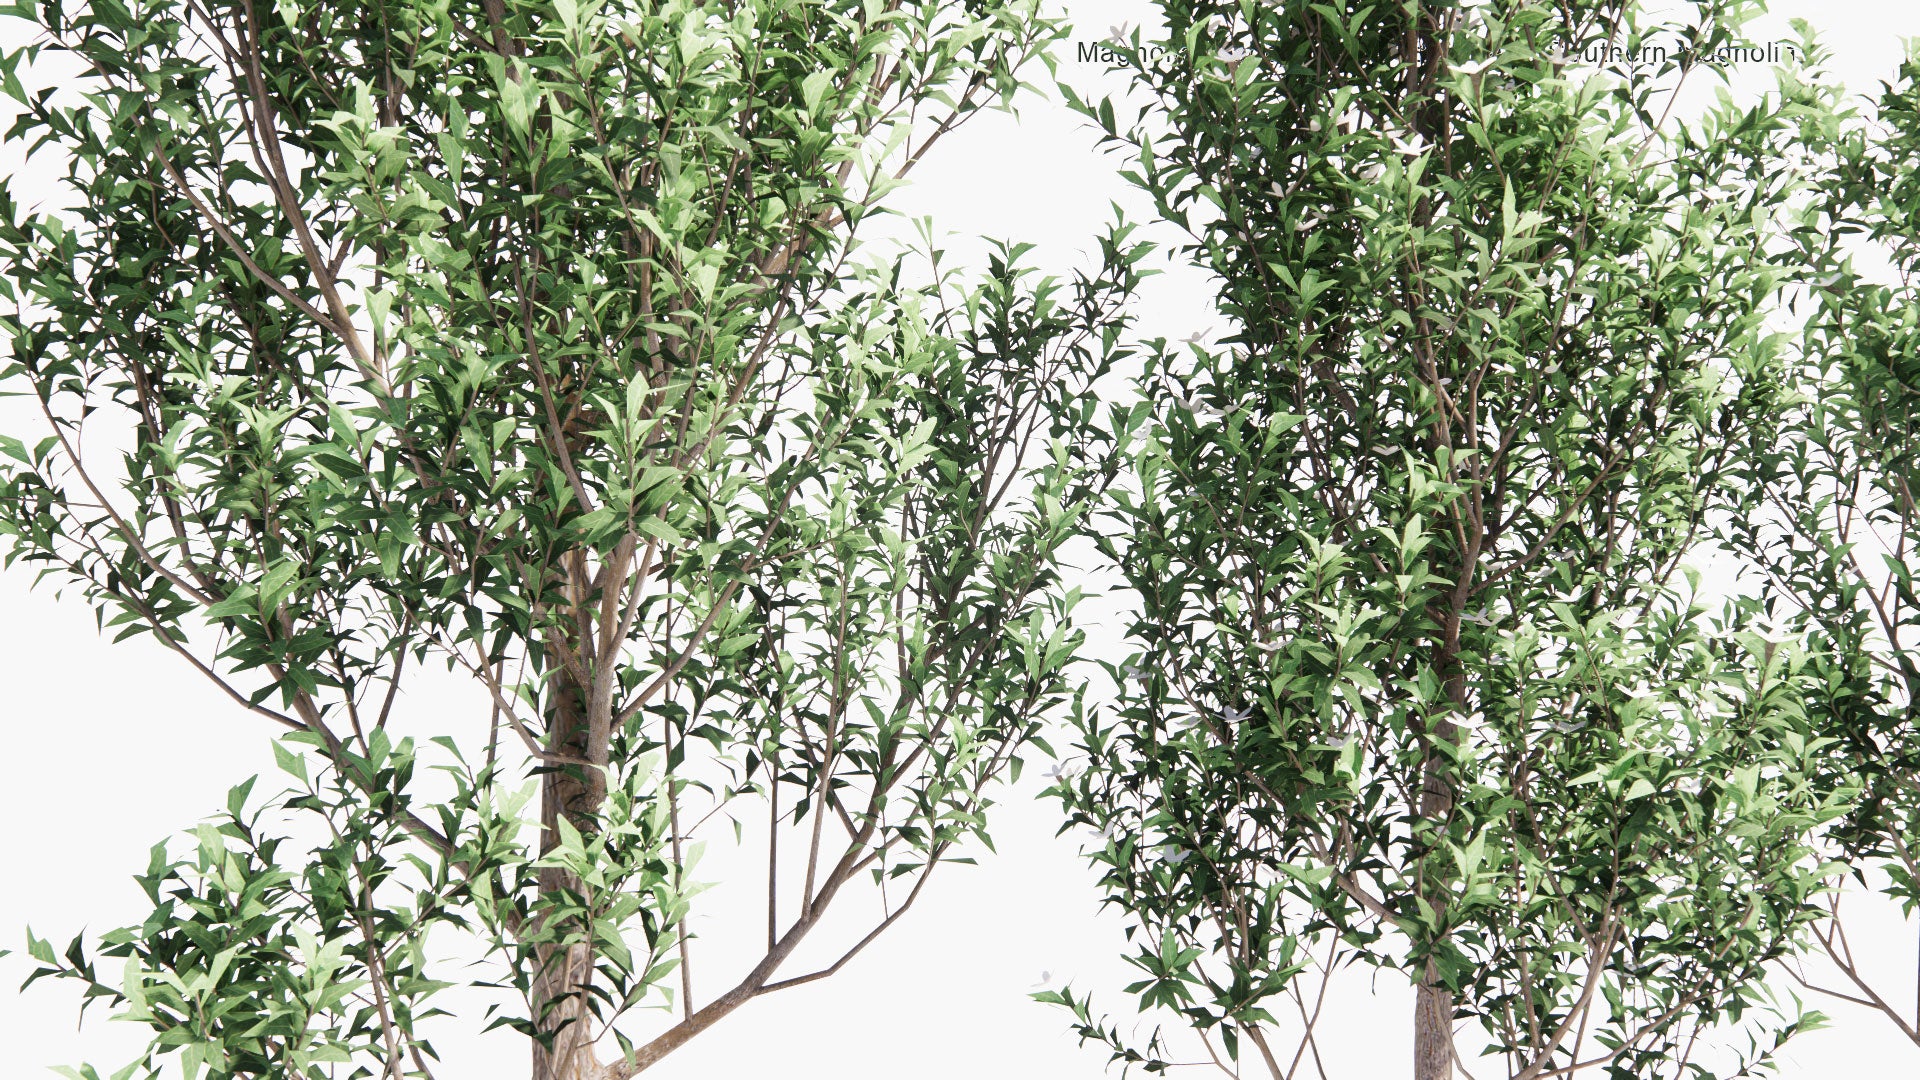 Low Poly Magnolia Grandiflora ‘Teddy Bear’ - Southern Magnolia (3D Model)